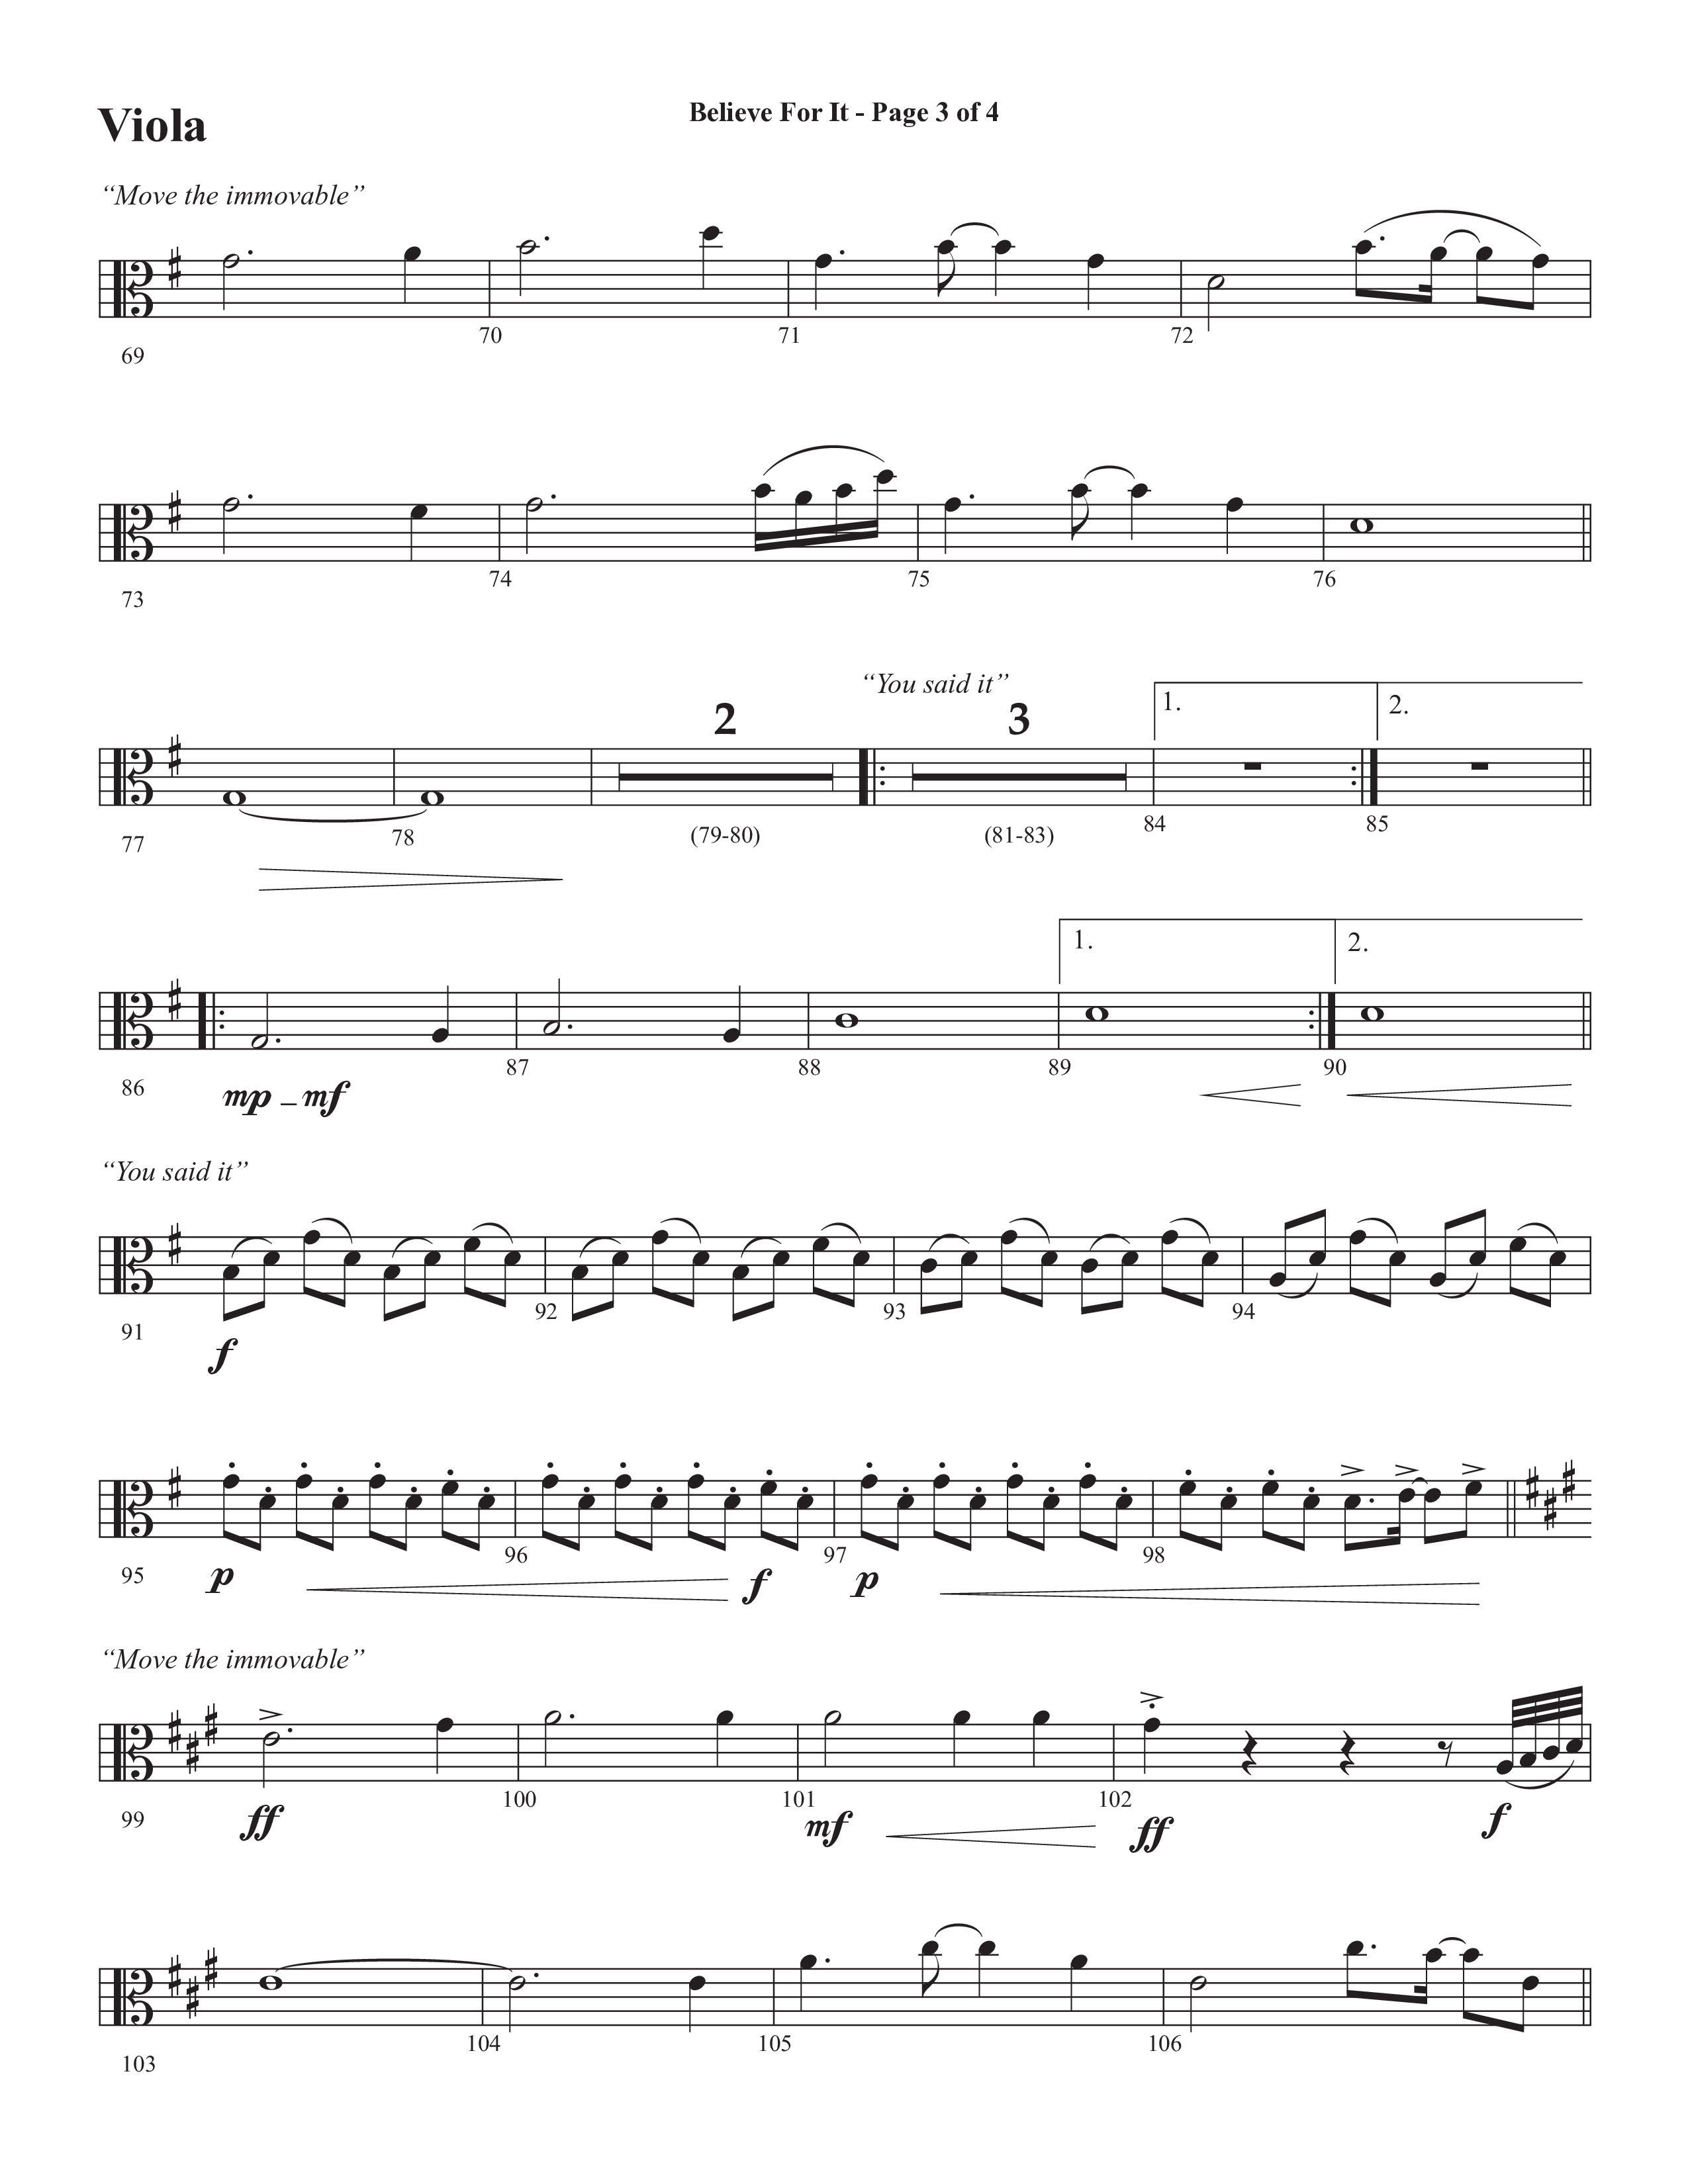 Believe For It (Choral Anthem SATB) Viola (Semsen Music / Arr. Phil Nitz)